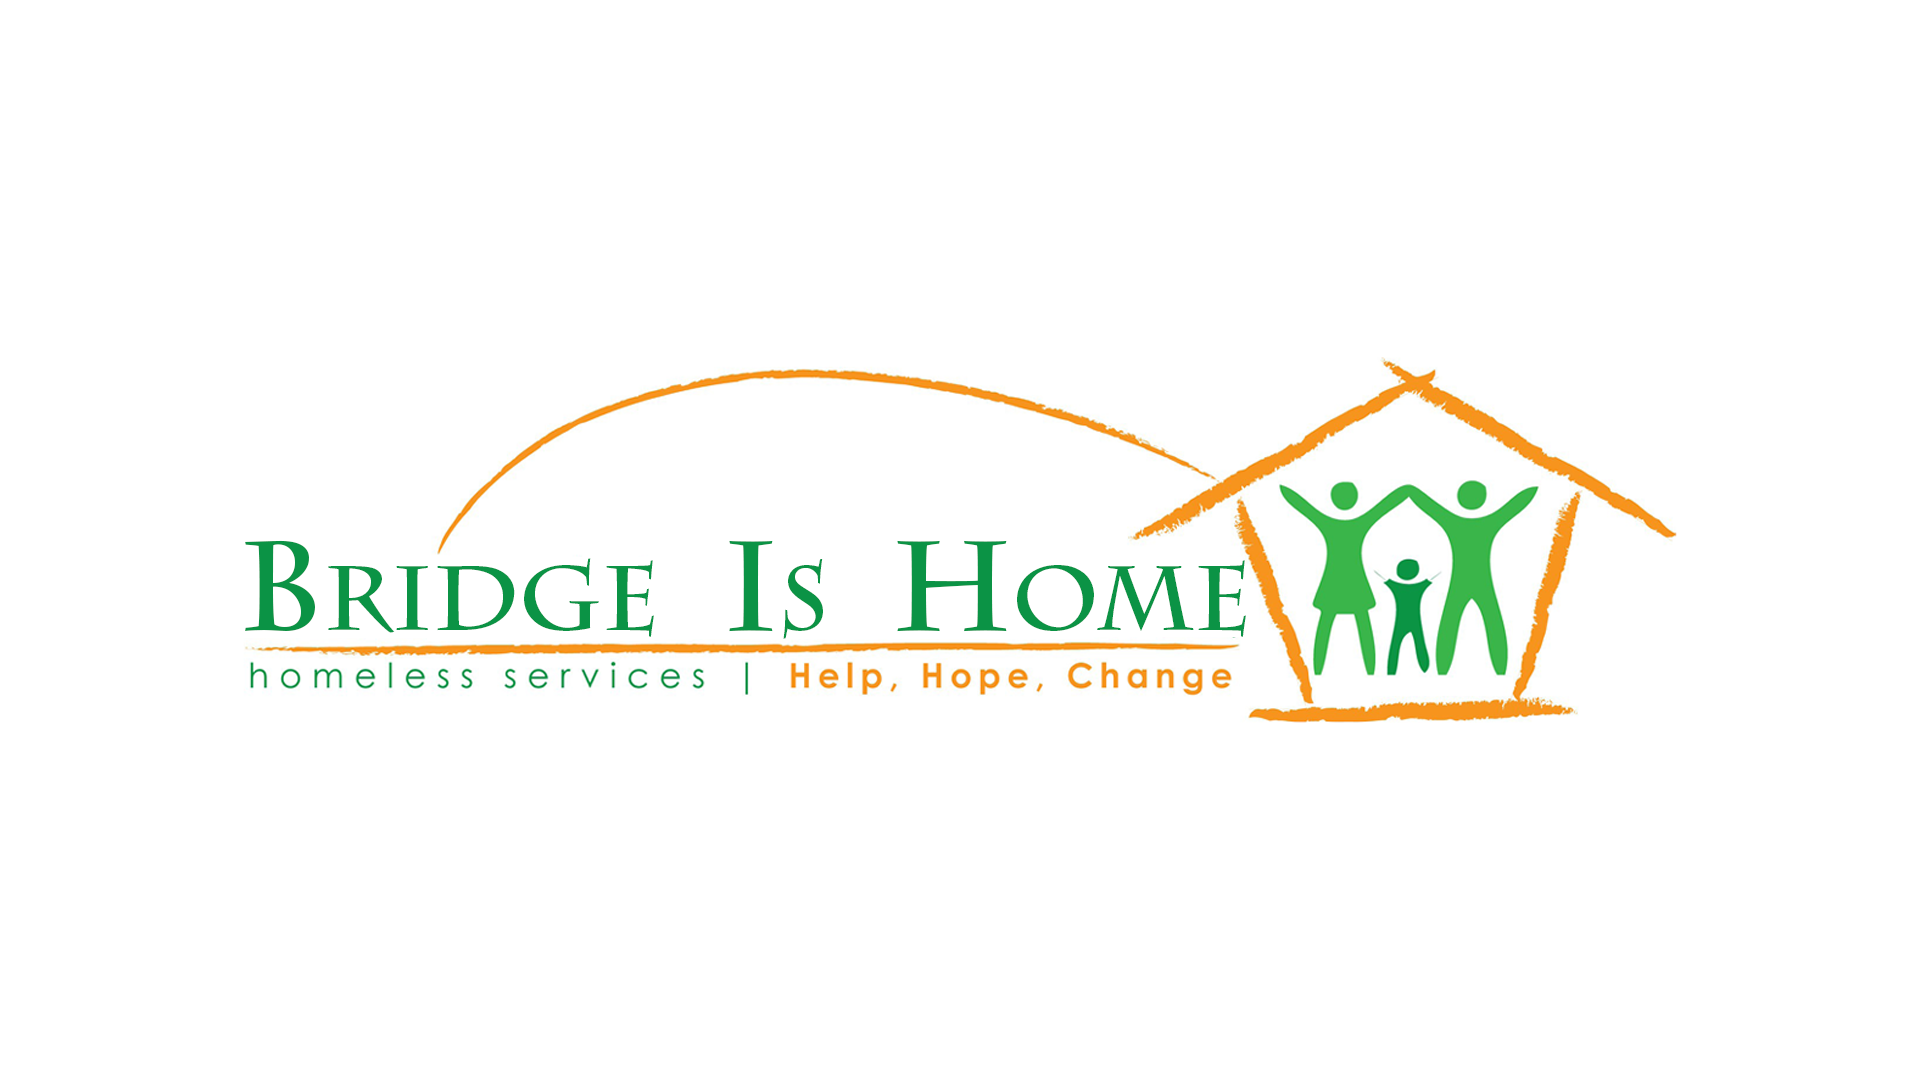 Bridge To Home faces funding shortfall, renames itself “Bridge Is Home”